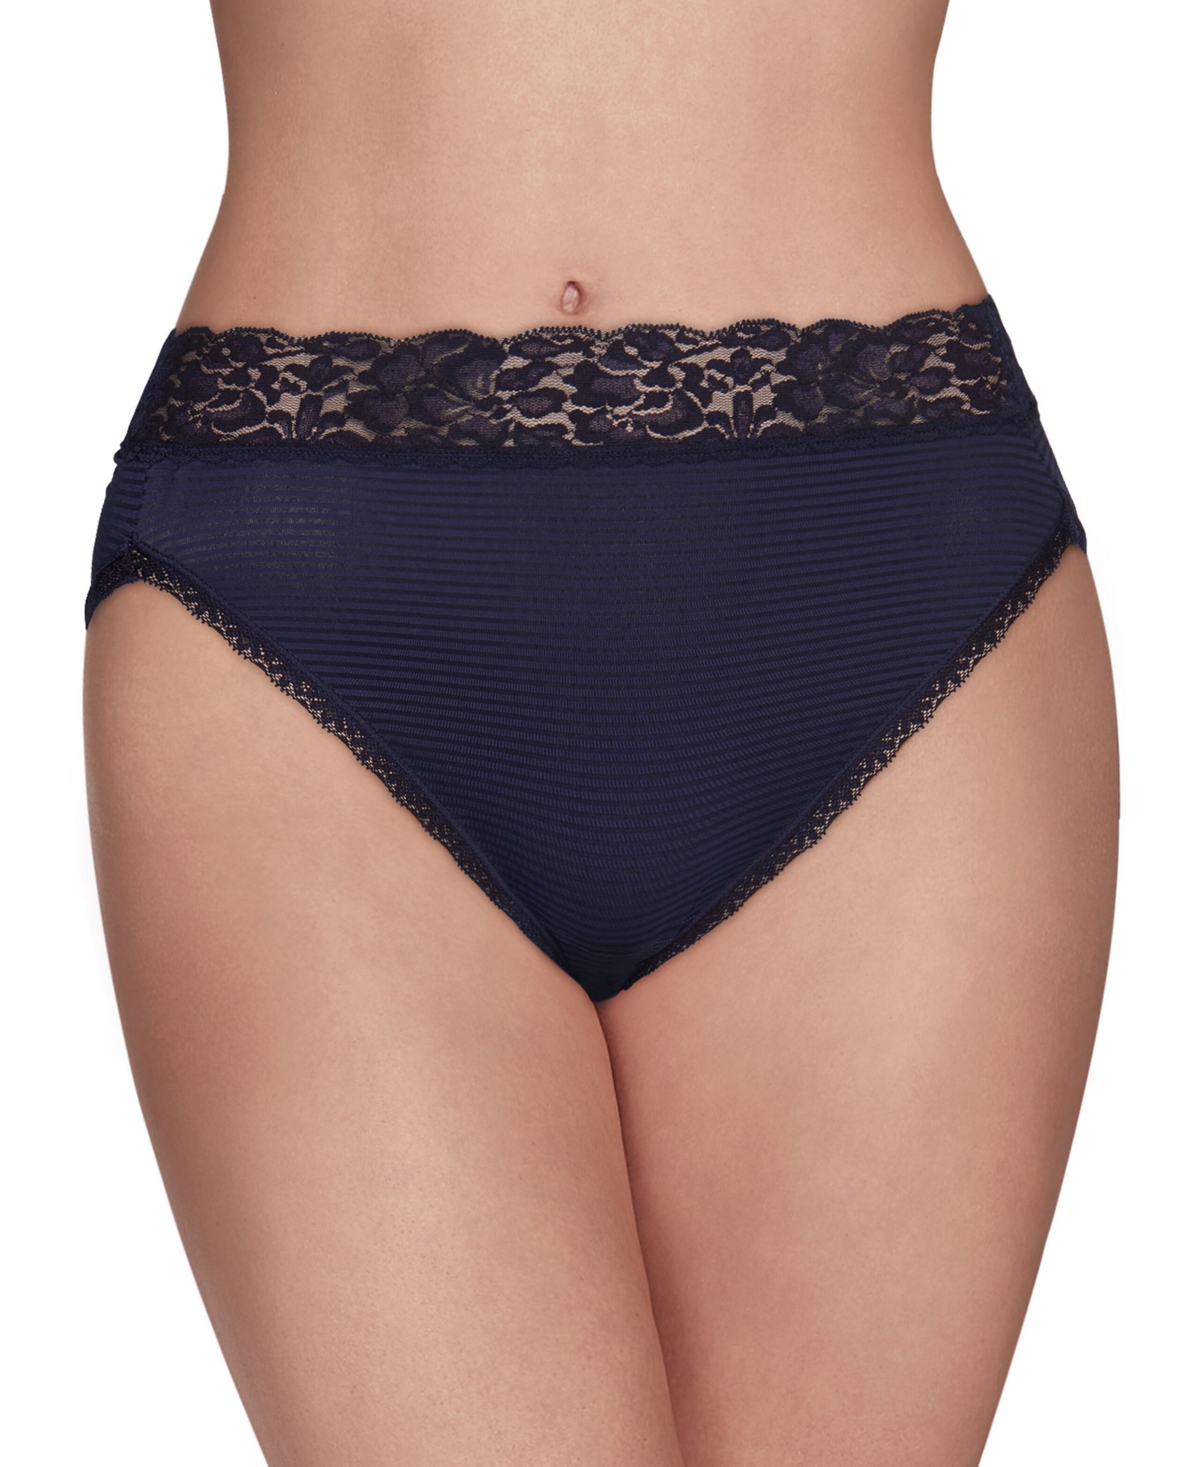 Women's Flattering Lace Hi-Cut Panty Underwear 13280, extended sizes available - Centennial Leopard Print